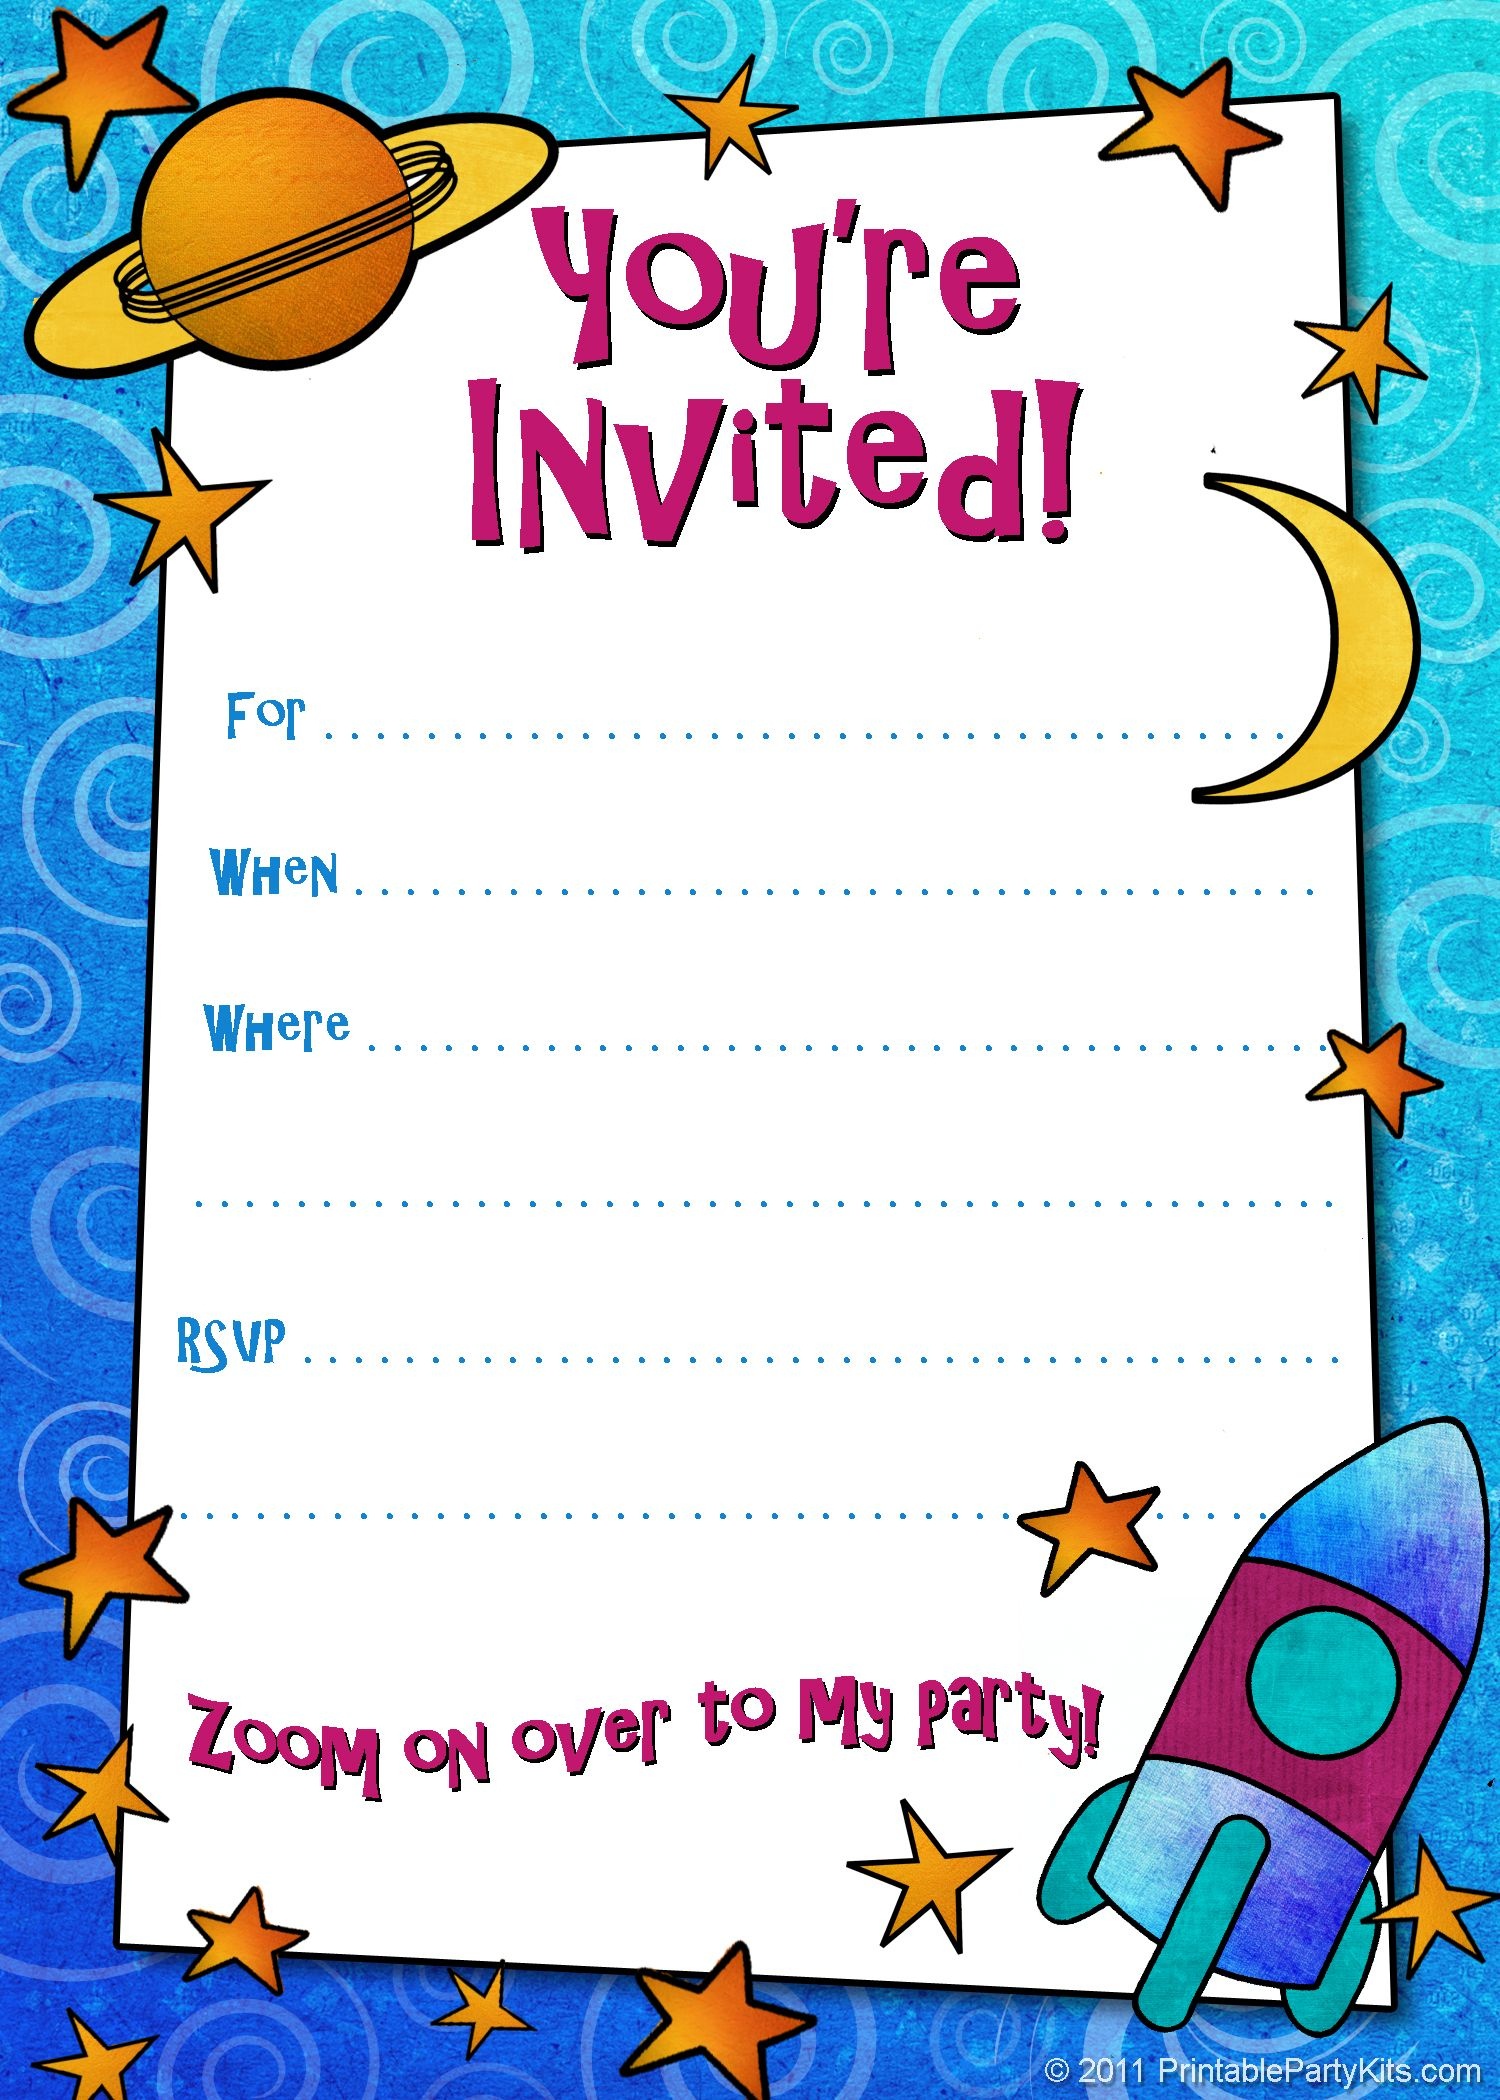 Free Printable Boys Birthday Party Invitations | Birthday Party - Free Printable Birthday Invitations For Kids